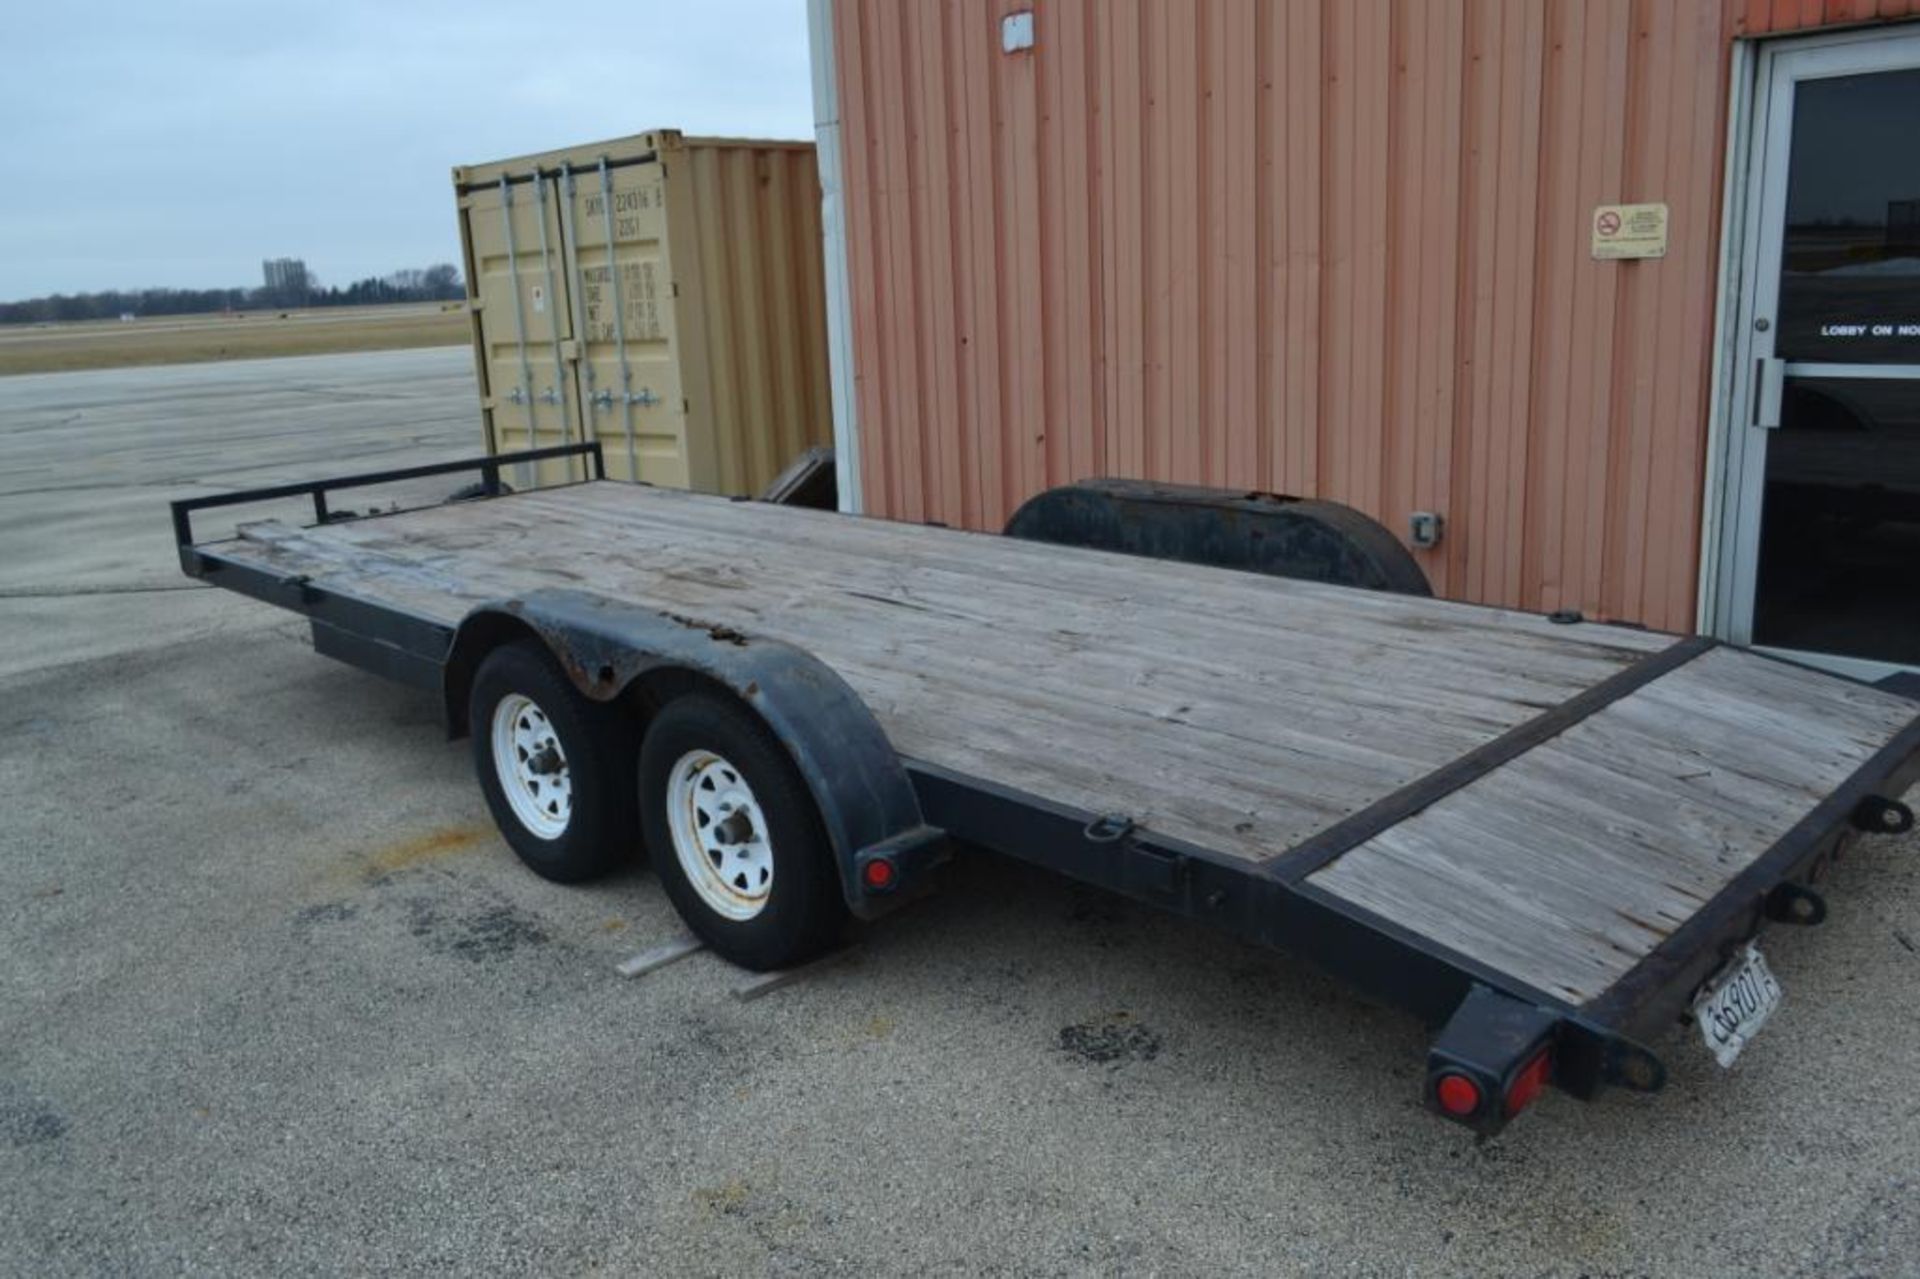 2010 Load Trailer, 7 ft. x 20 ft. Tandem-Axle Wood Deck Equipment Trailer, VIN 4ZECH2020A1077378 - Image 2 of 3